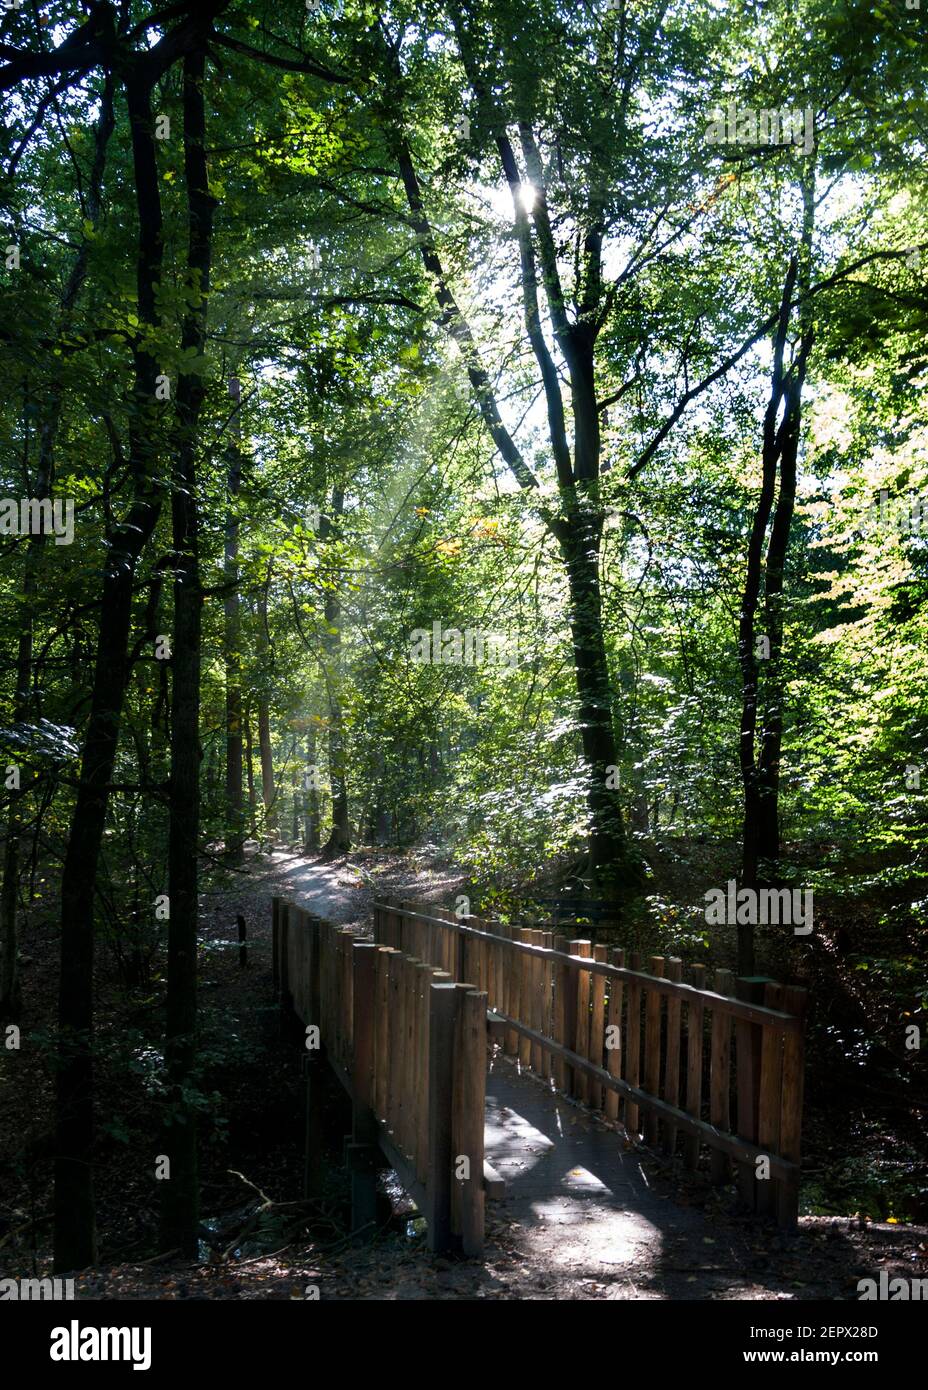 Beams of sunlight penetrating the foliage over a cute wooden footbridge Stock Photo